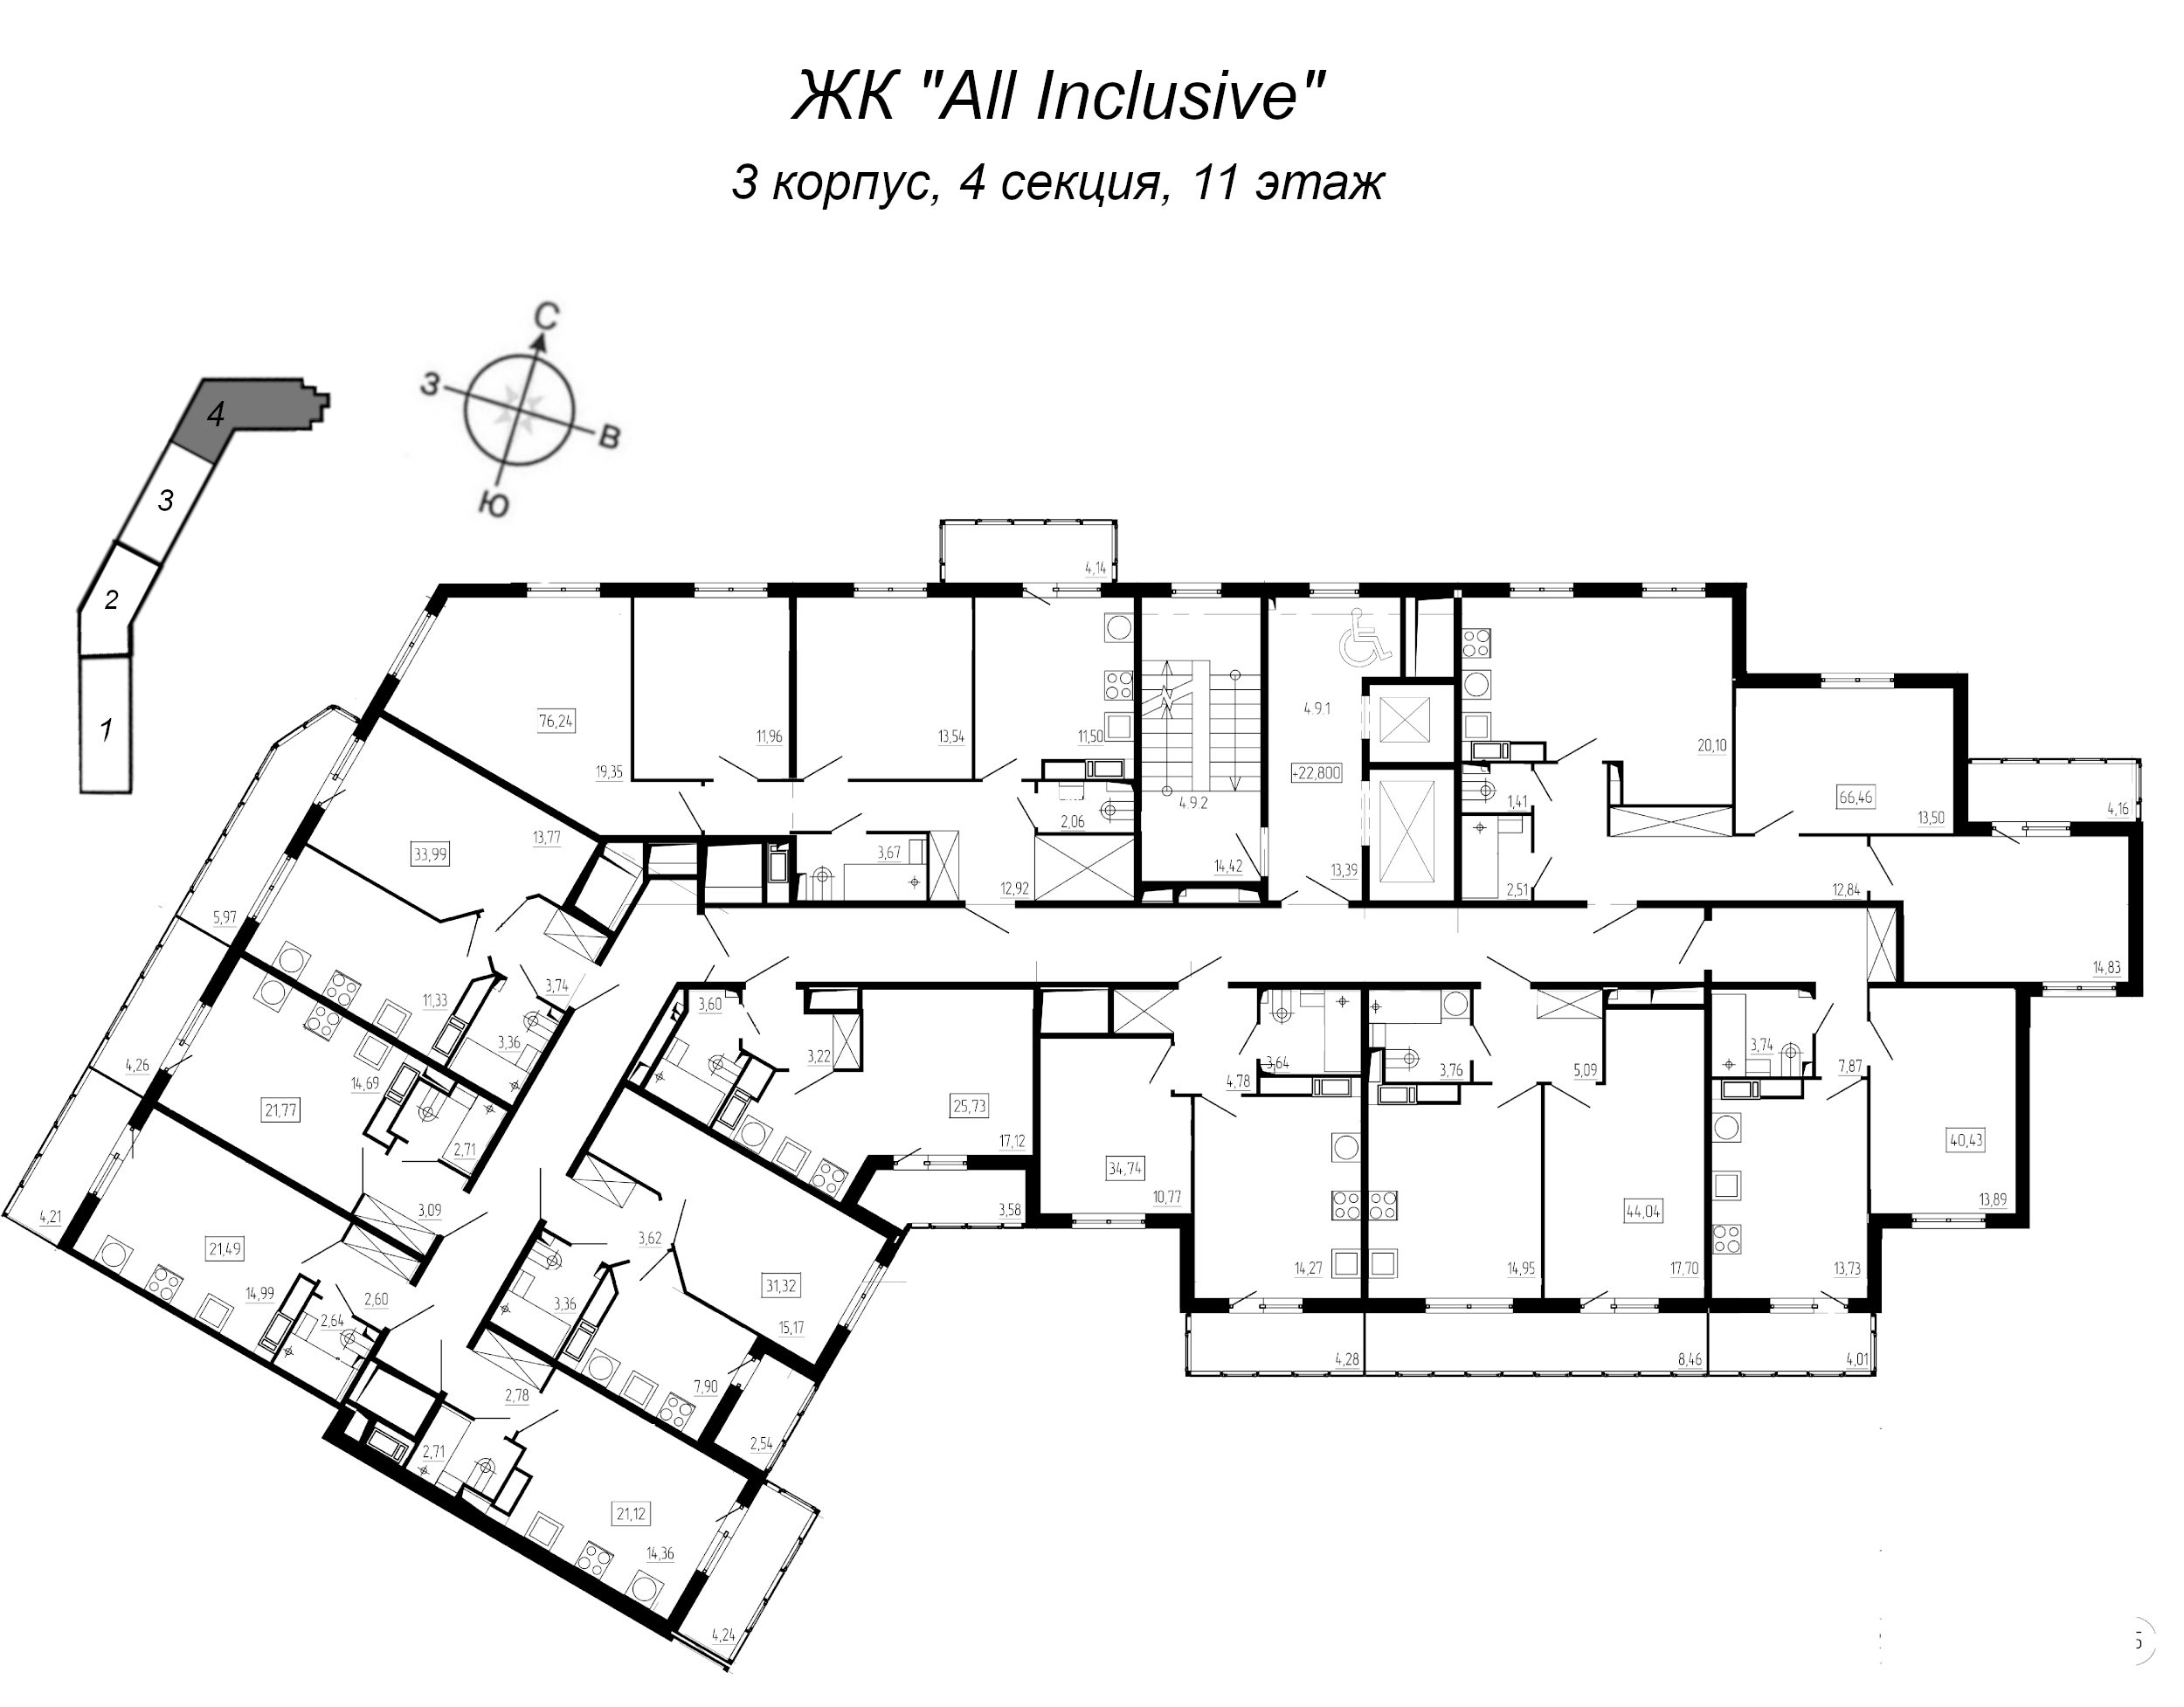 1-комнатная квартира, 33.99 м² в ЖК "All Inclusive" - планировка этажа